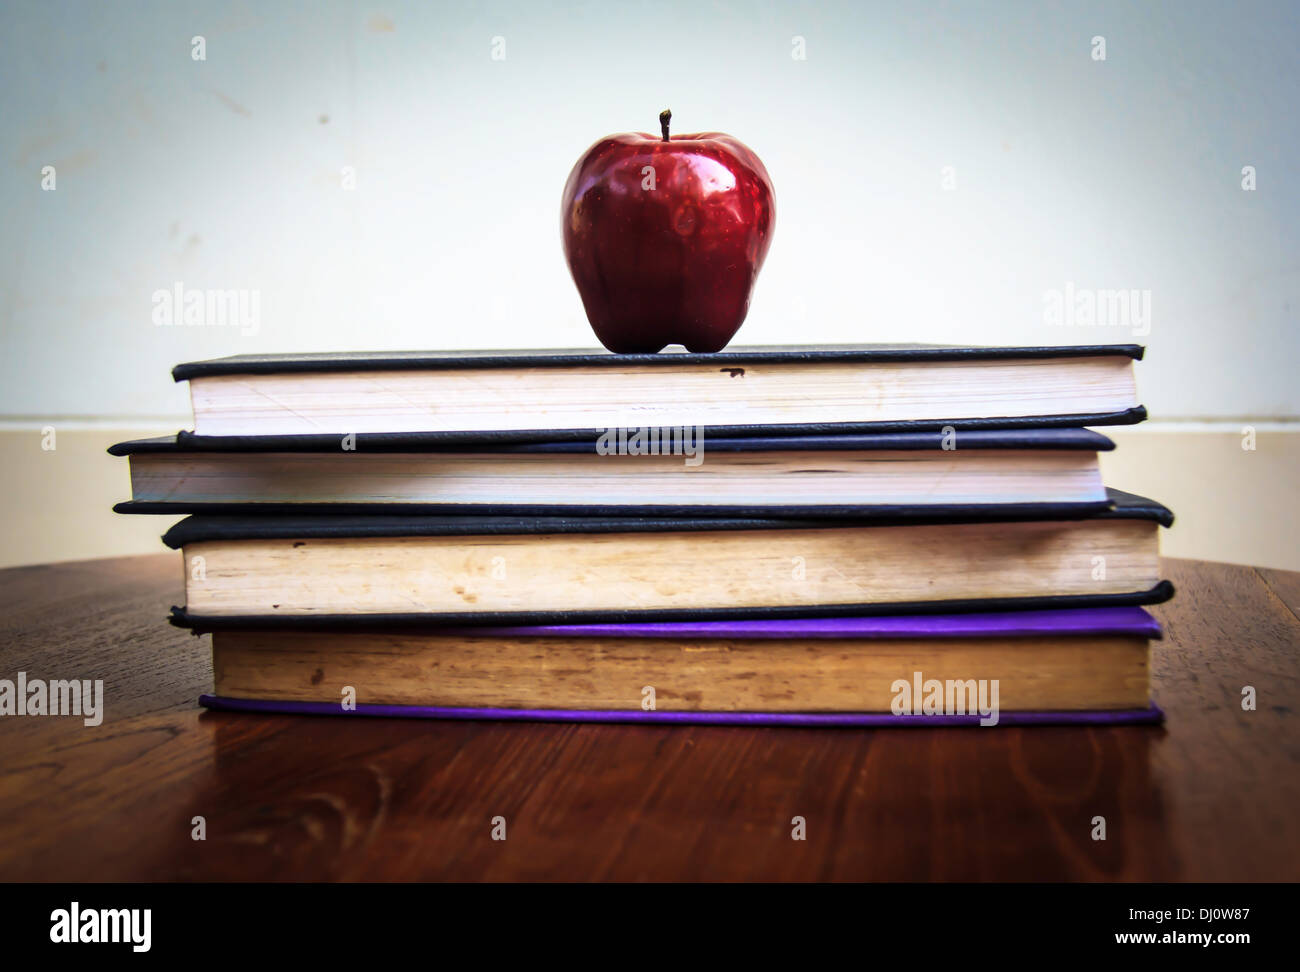 Candi Apple in Teachers Pet